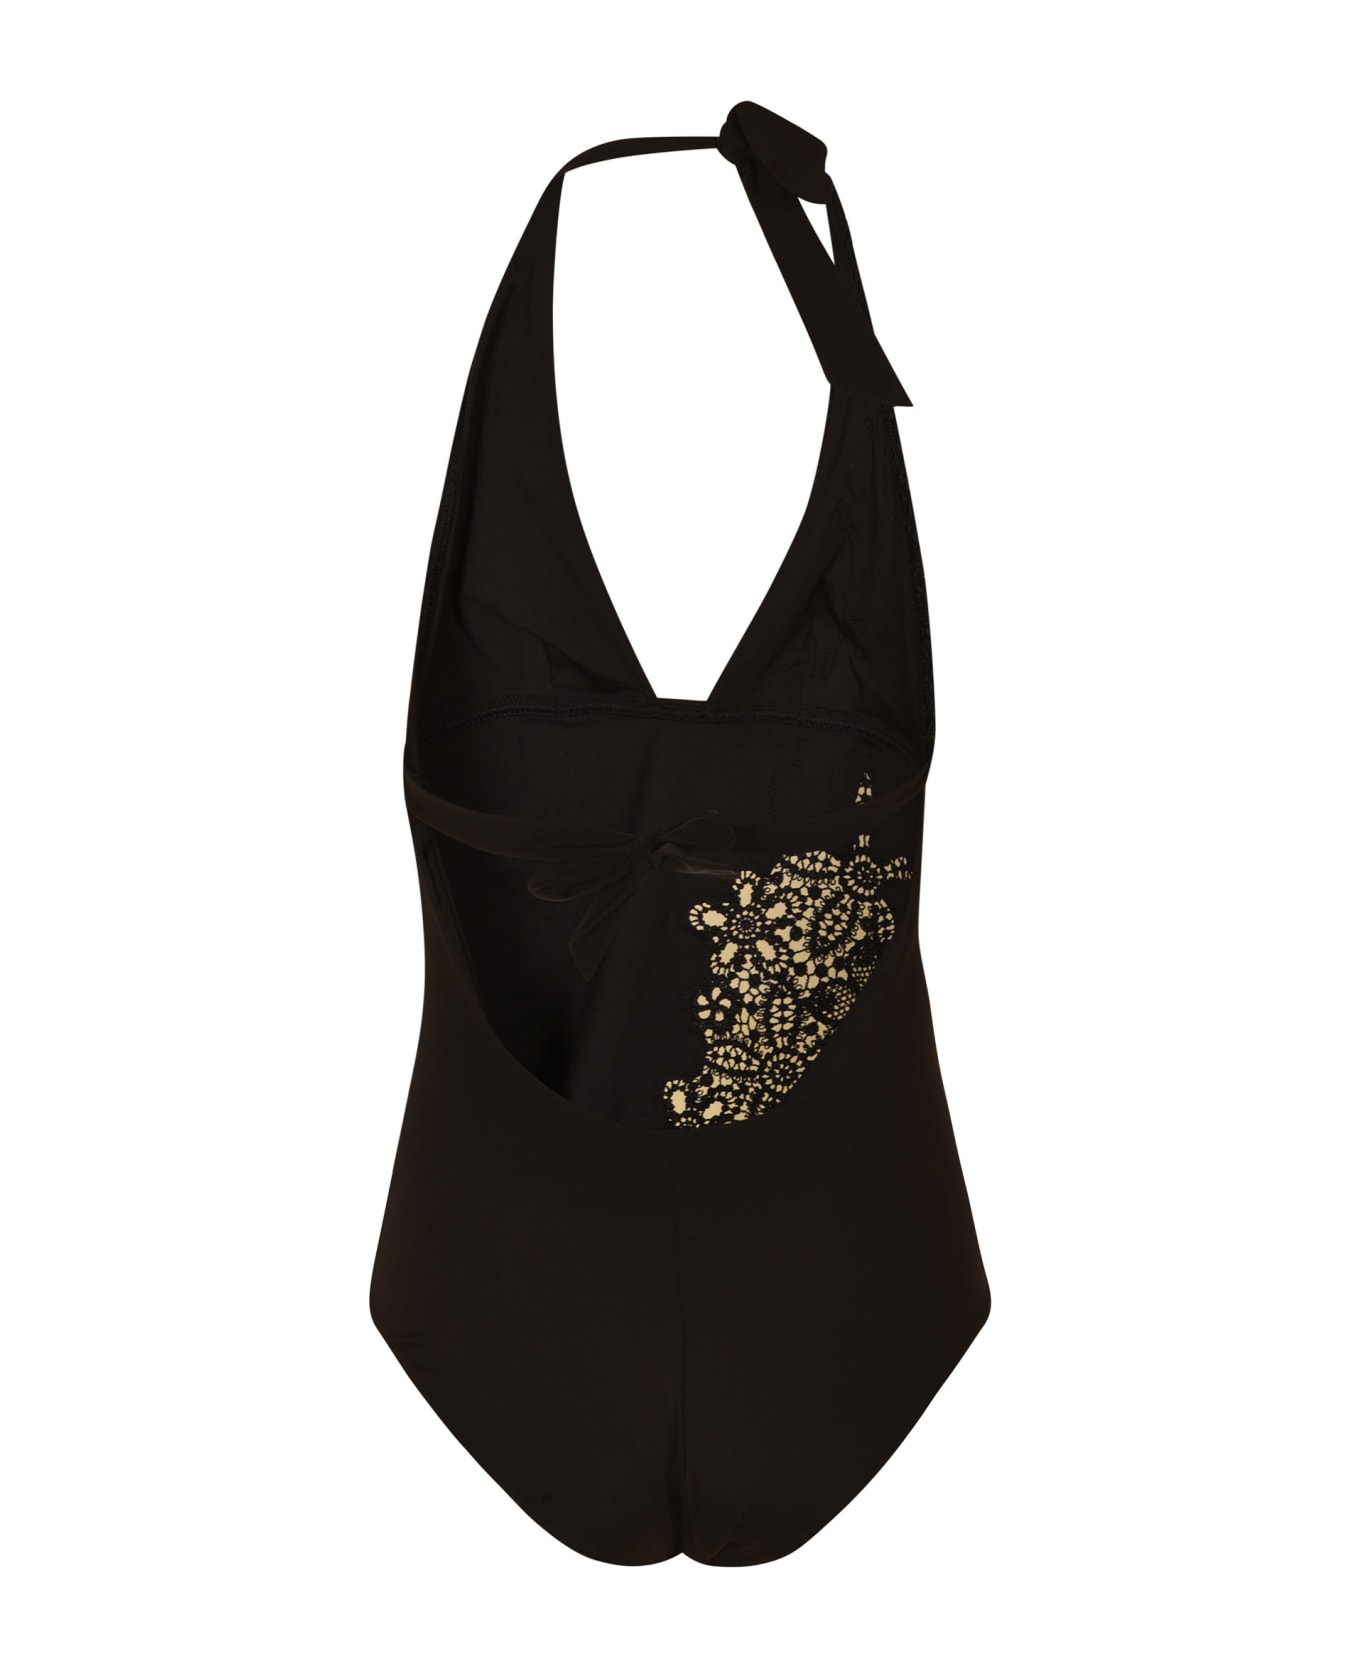 Ermanno Scervino Floral Perforated Swimsuit - Black 水着